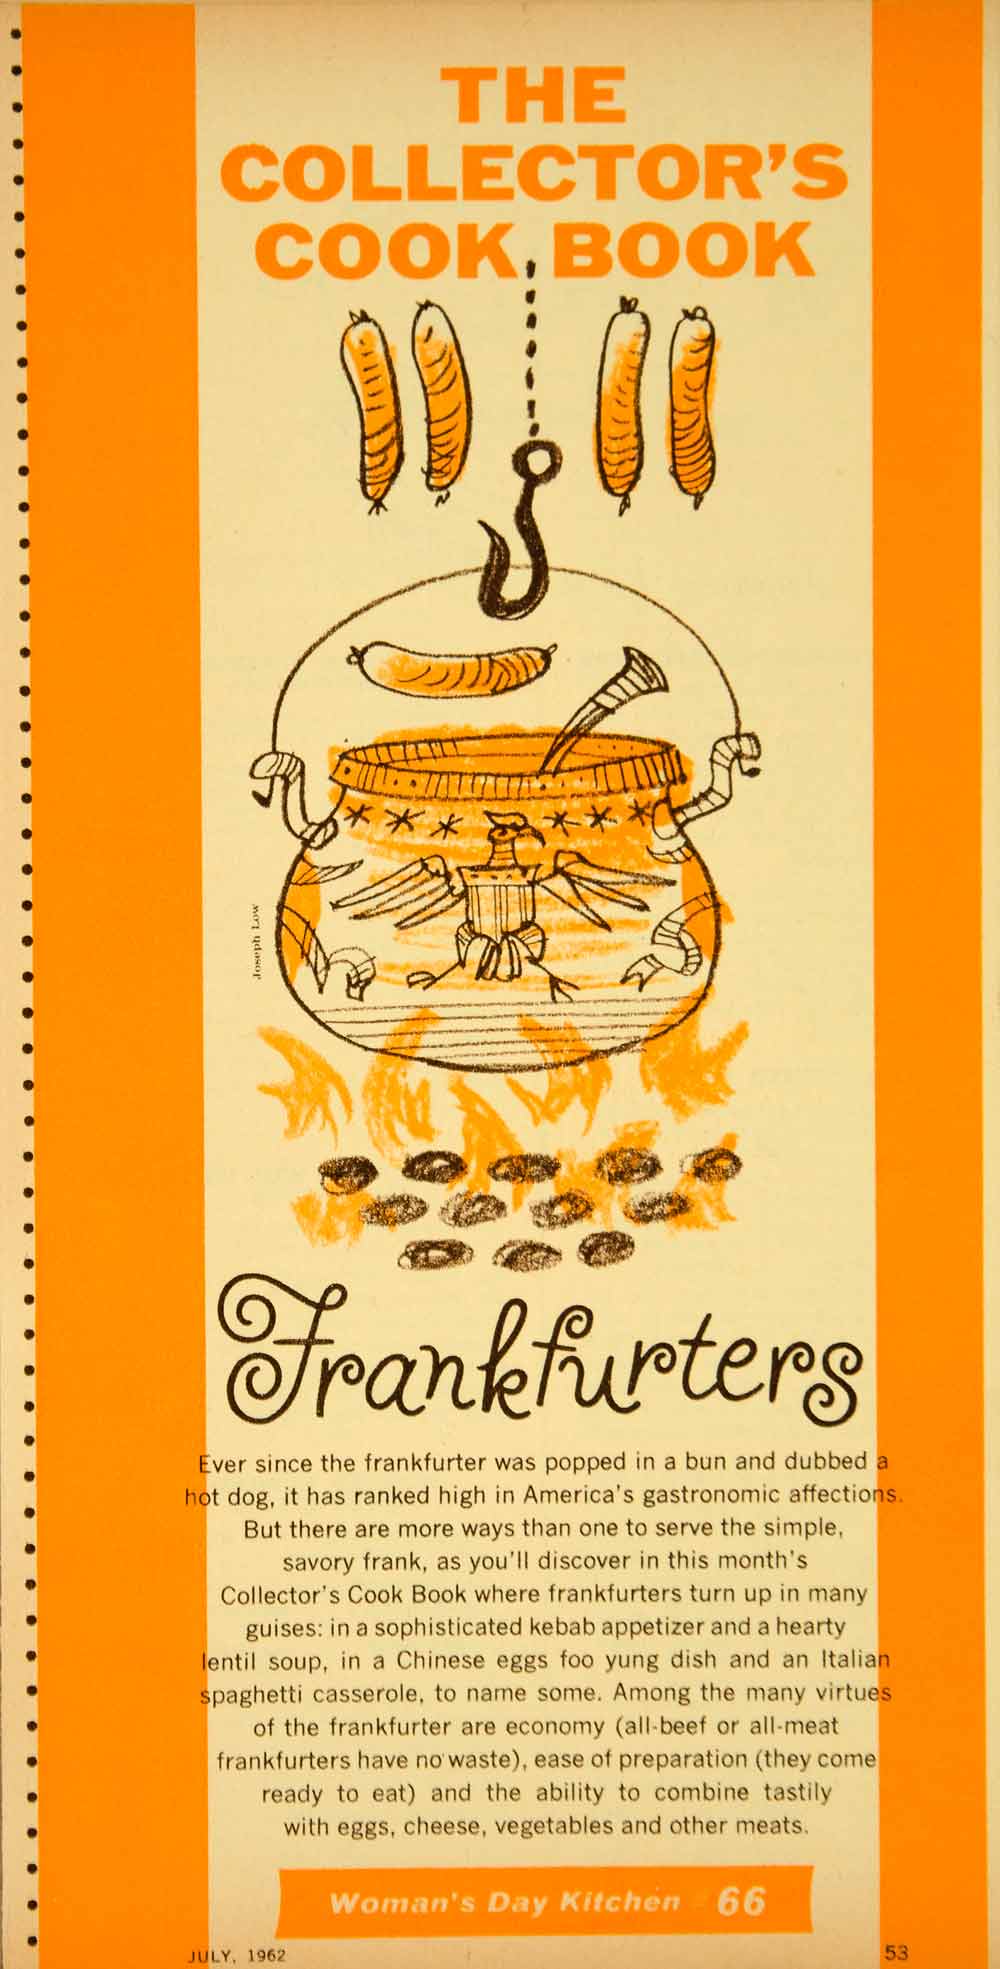 1962 Color Print Frankfurter Hot Dog 60s Recipes Coney Island Sixties Food YFR1